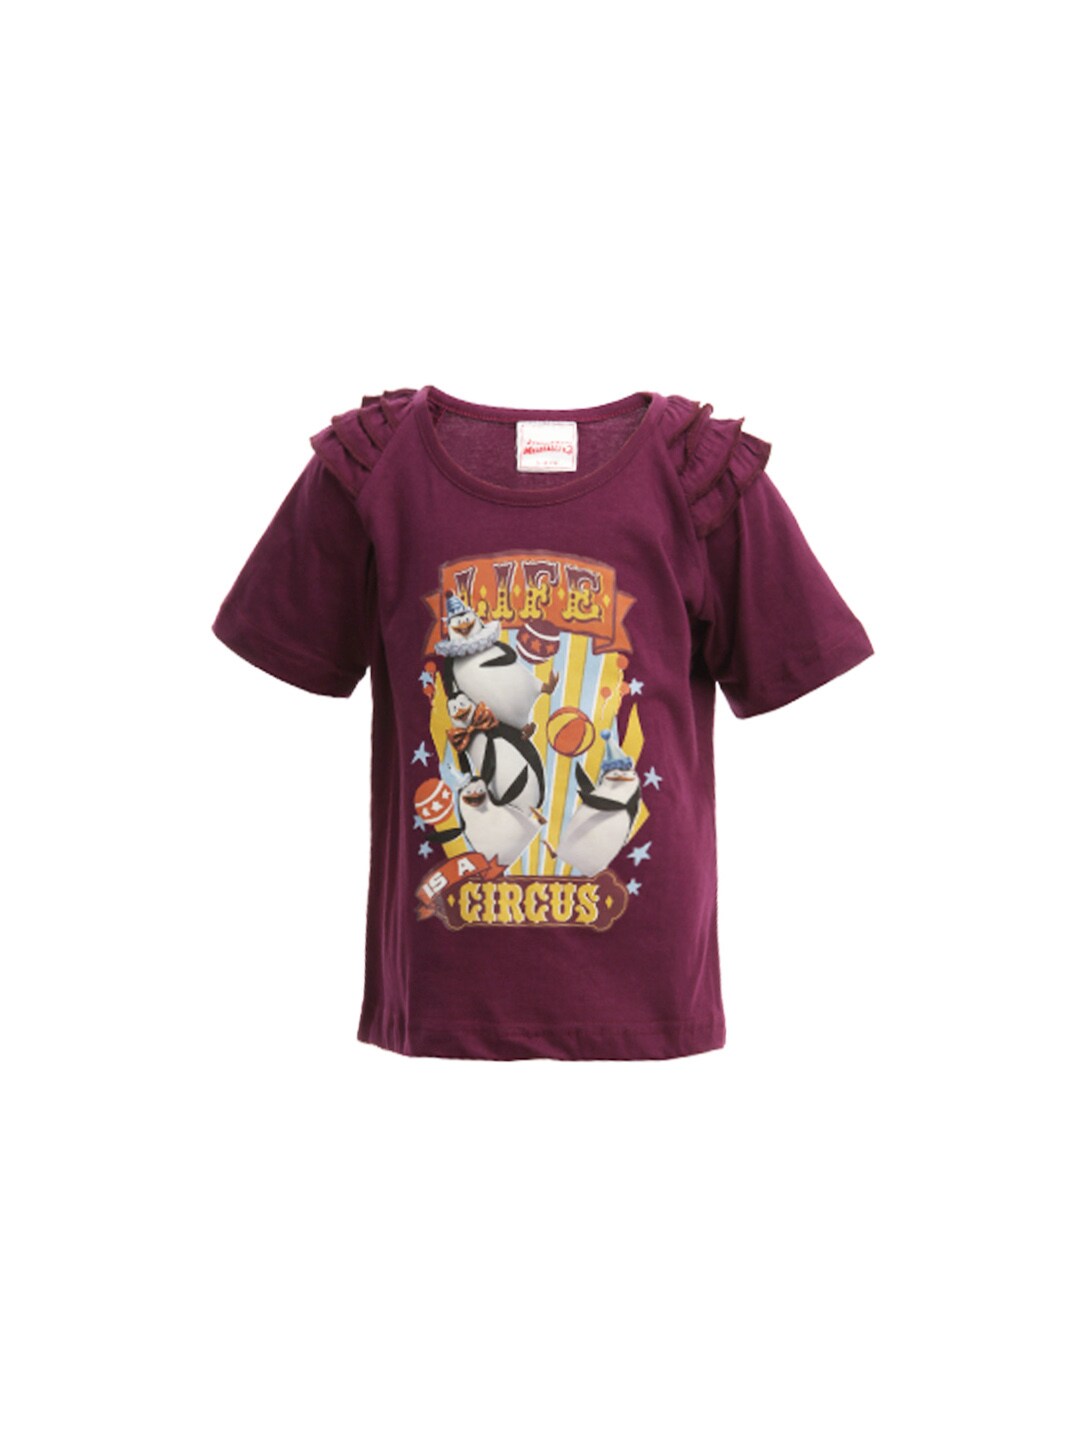 Madagascar3 Girls Purple Printed T-Shirt